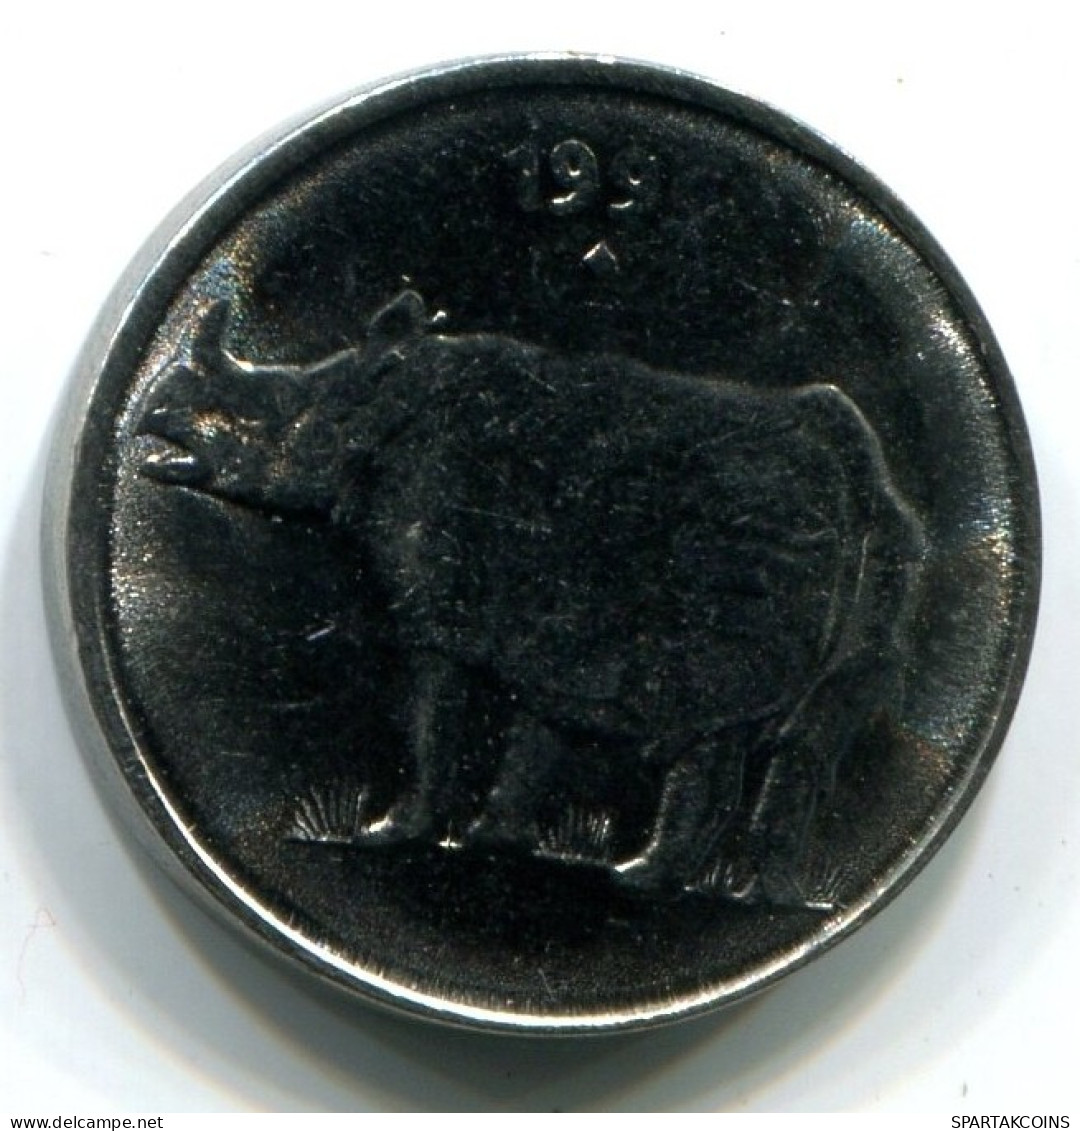 25 PAISE 1999 INDIA UNC Coin #W11441.U.A - India